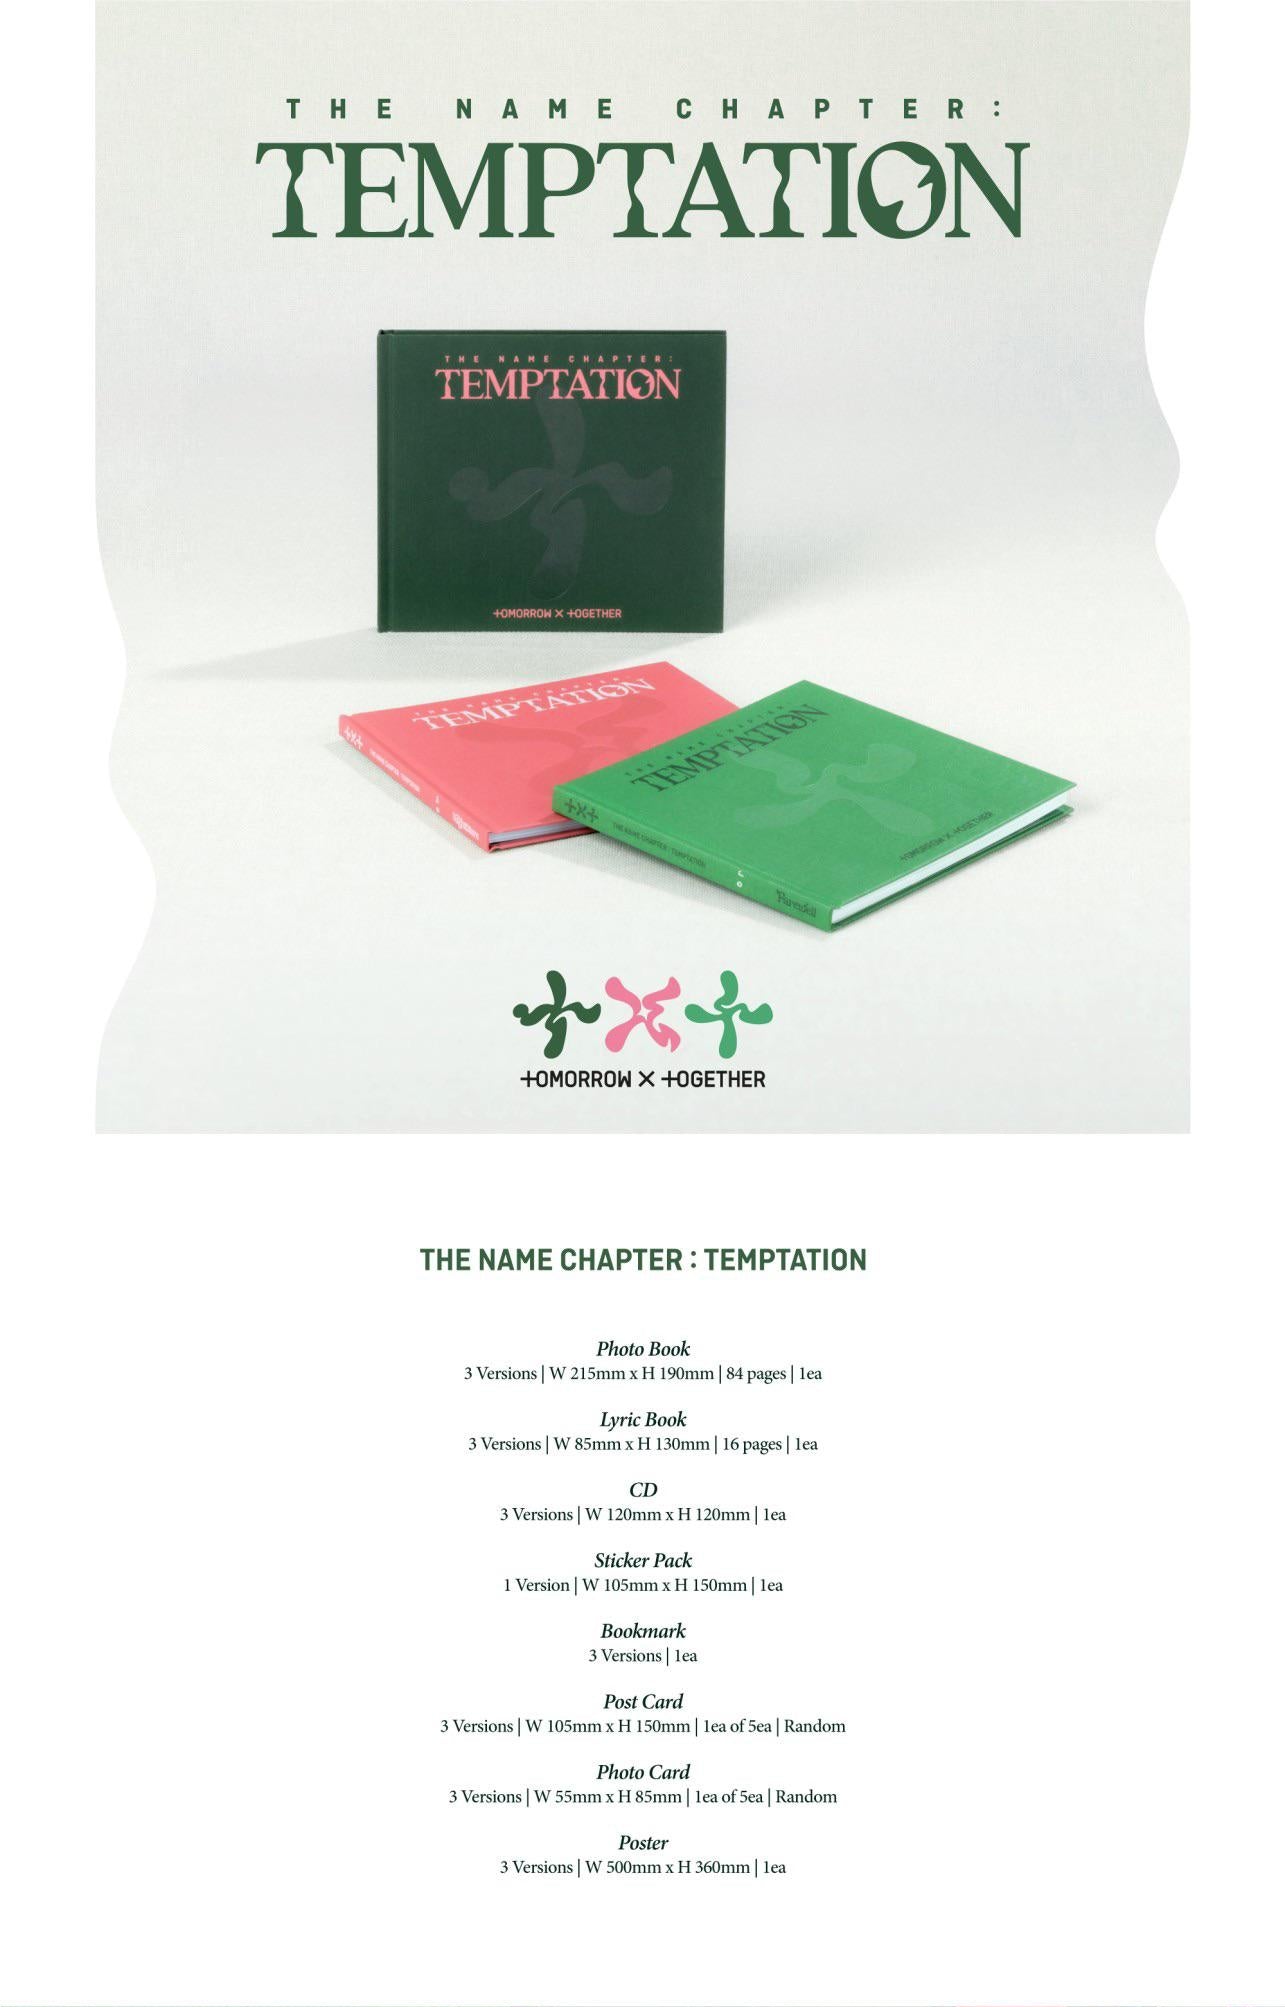 TXT - Mini-Album 'The Name Chapter: TEMPTATION'